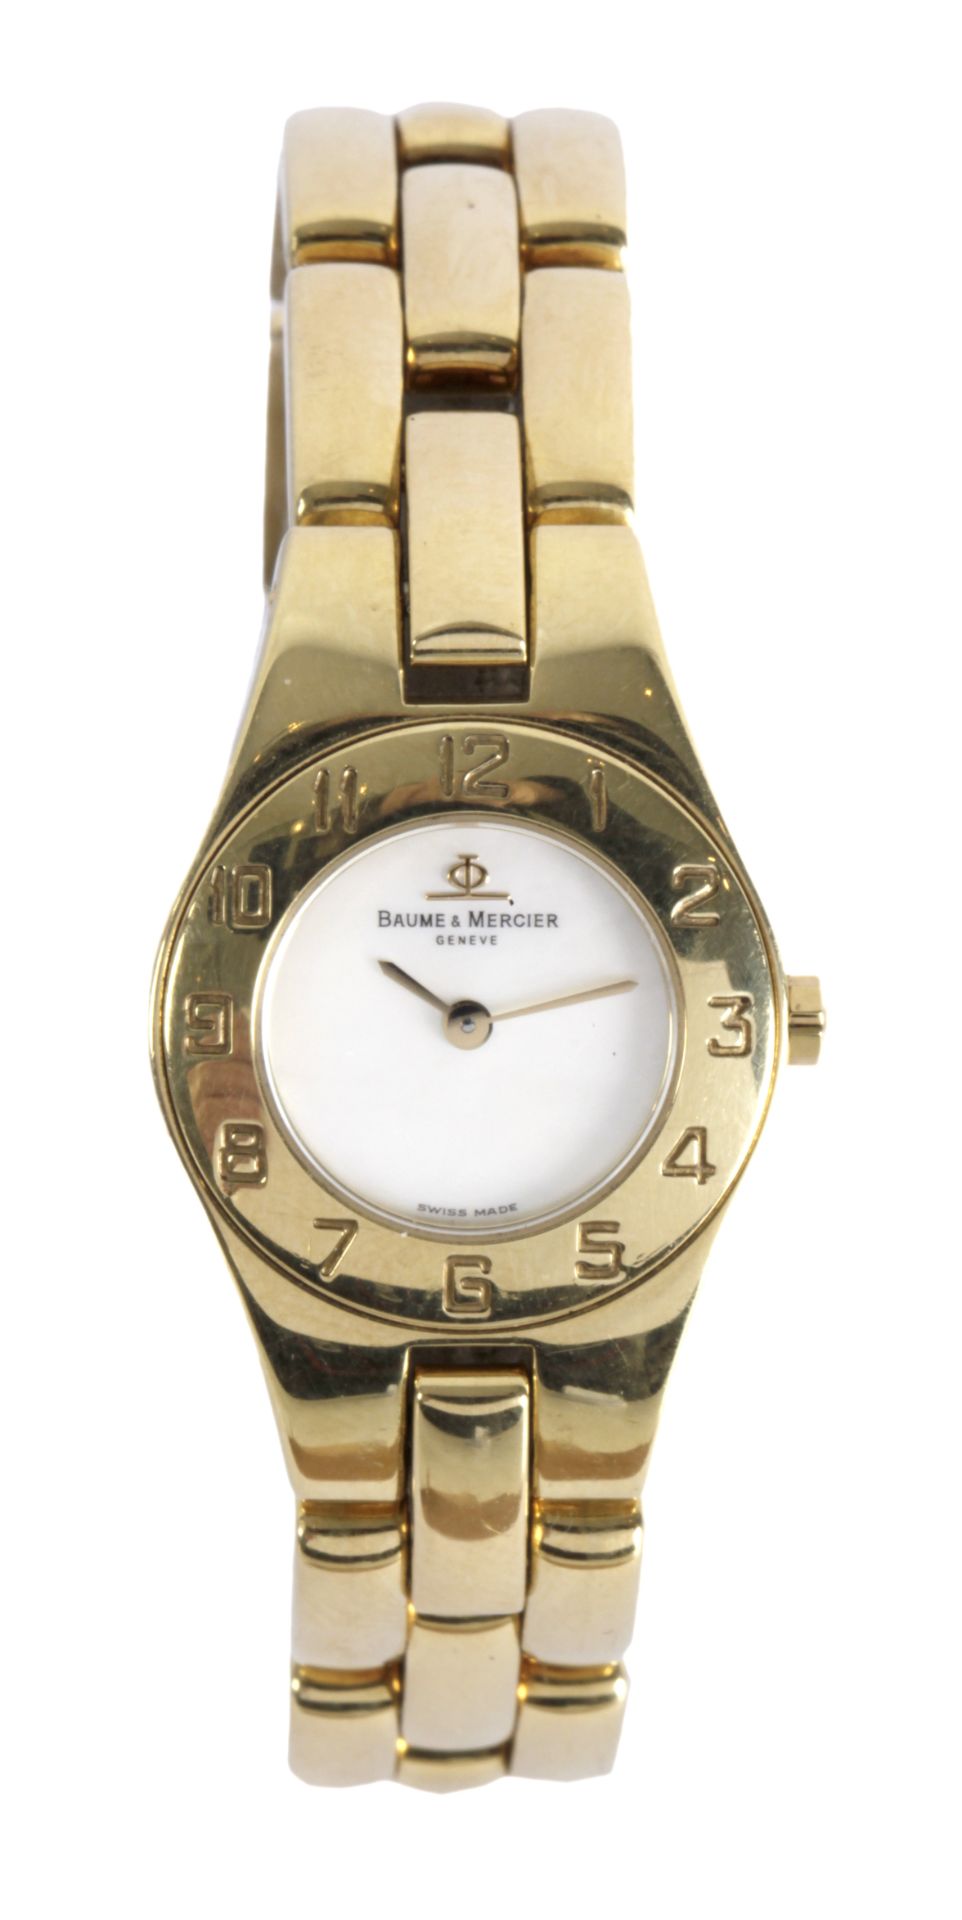 Baume & Mercier. Linea. An 18 k. yellow gold ladies wristwatch